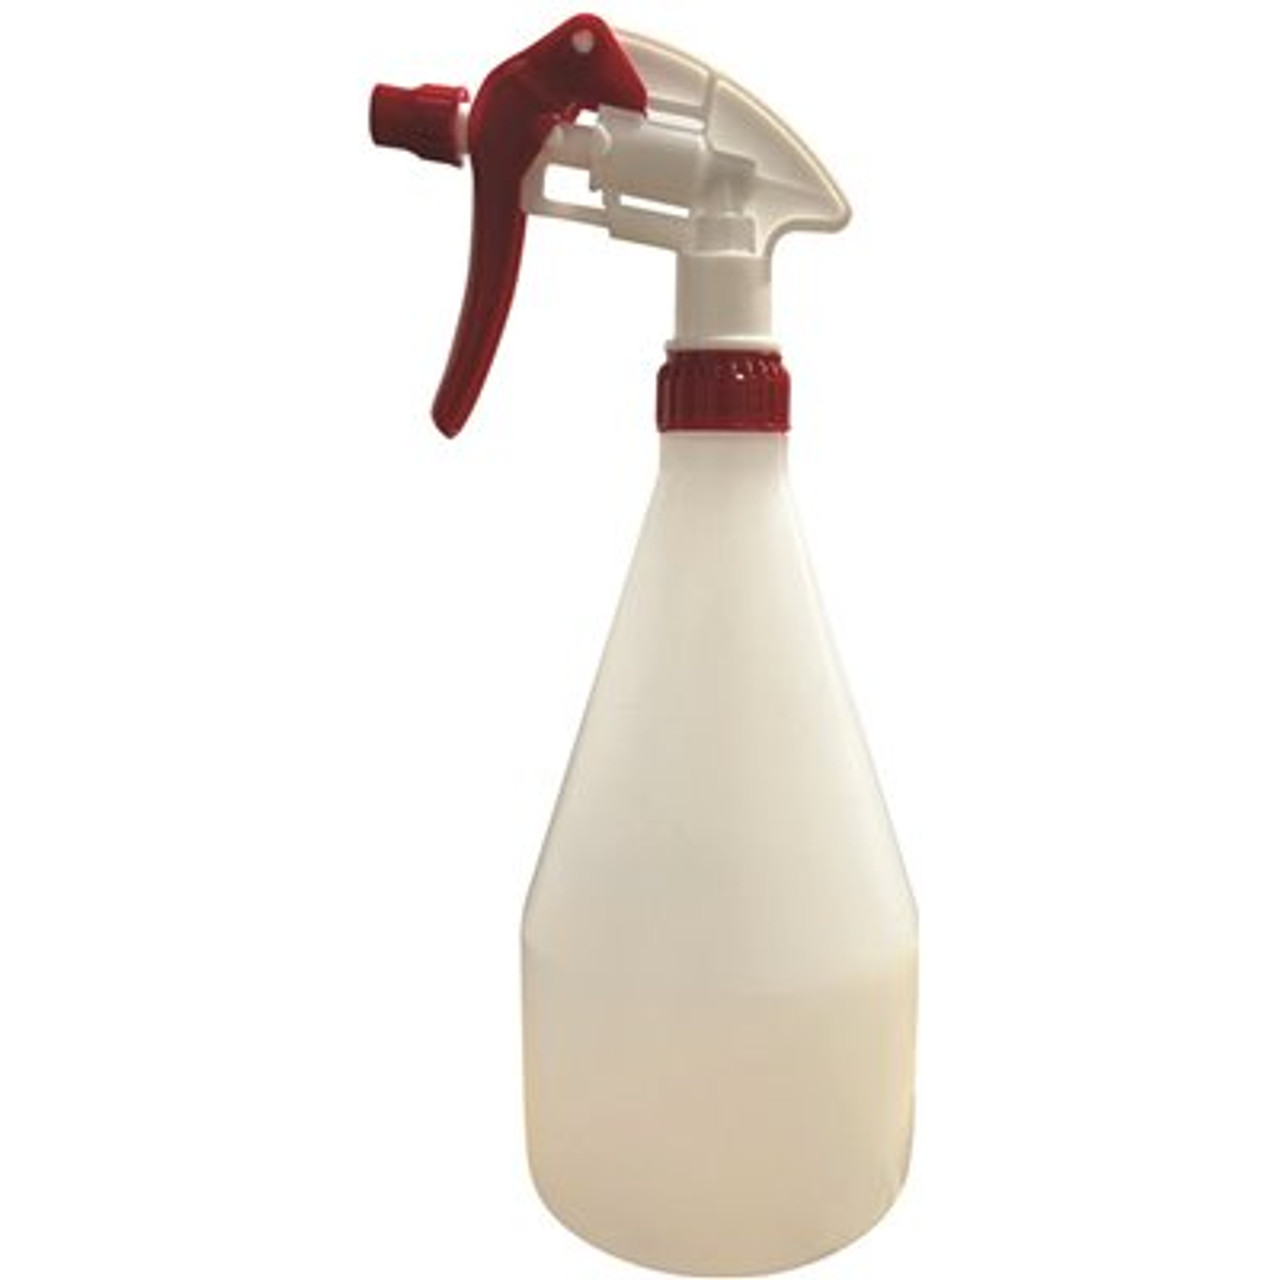 Industrial 32 Oz/1 Liter Spray Bottle With Graduation Marks